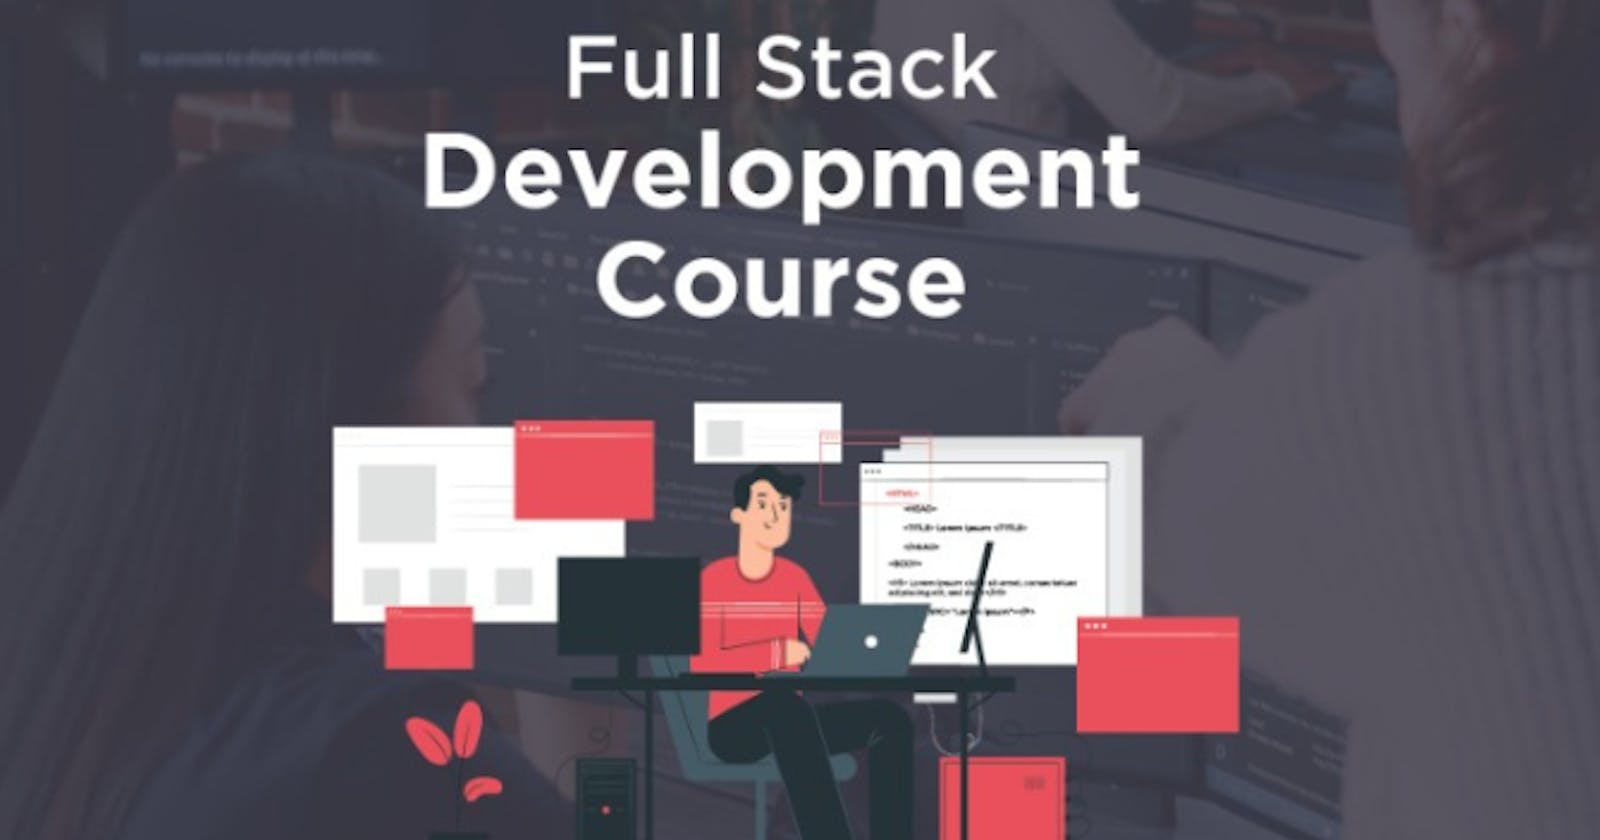 The Future of Full Stack Development